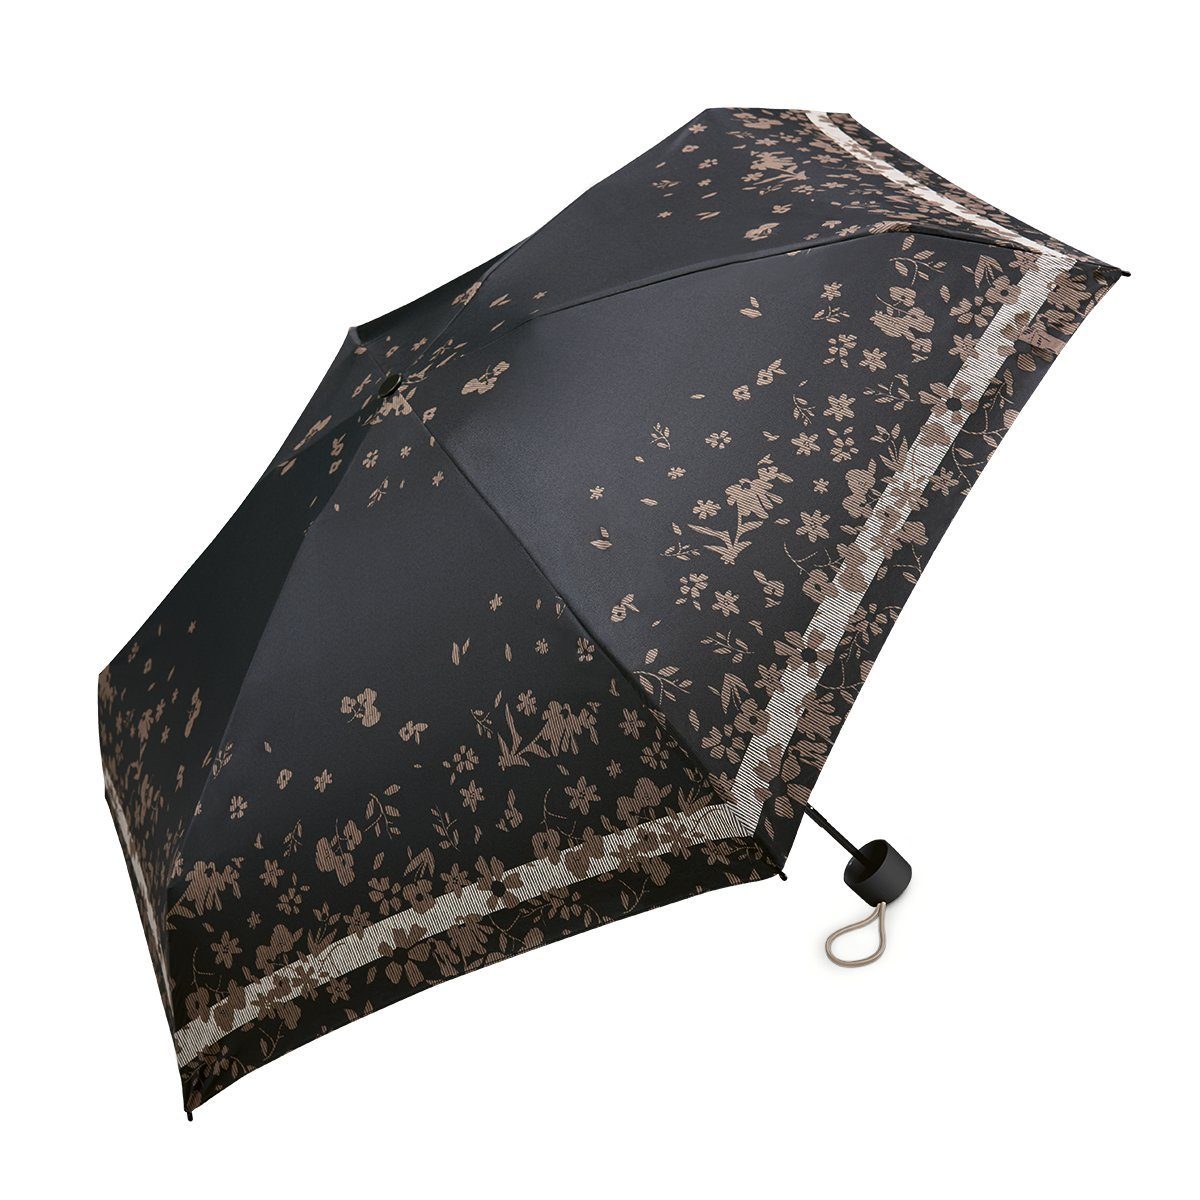 kompakter Taschenregenschirm Esprit kleiner, flower black Petito poetry Regenschirm